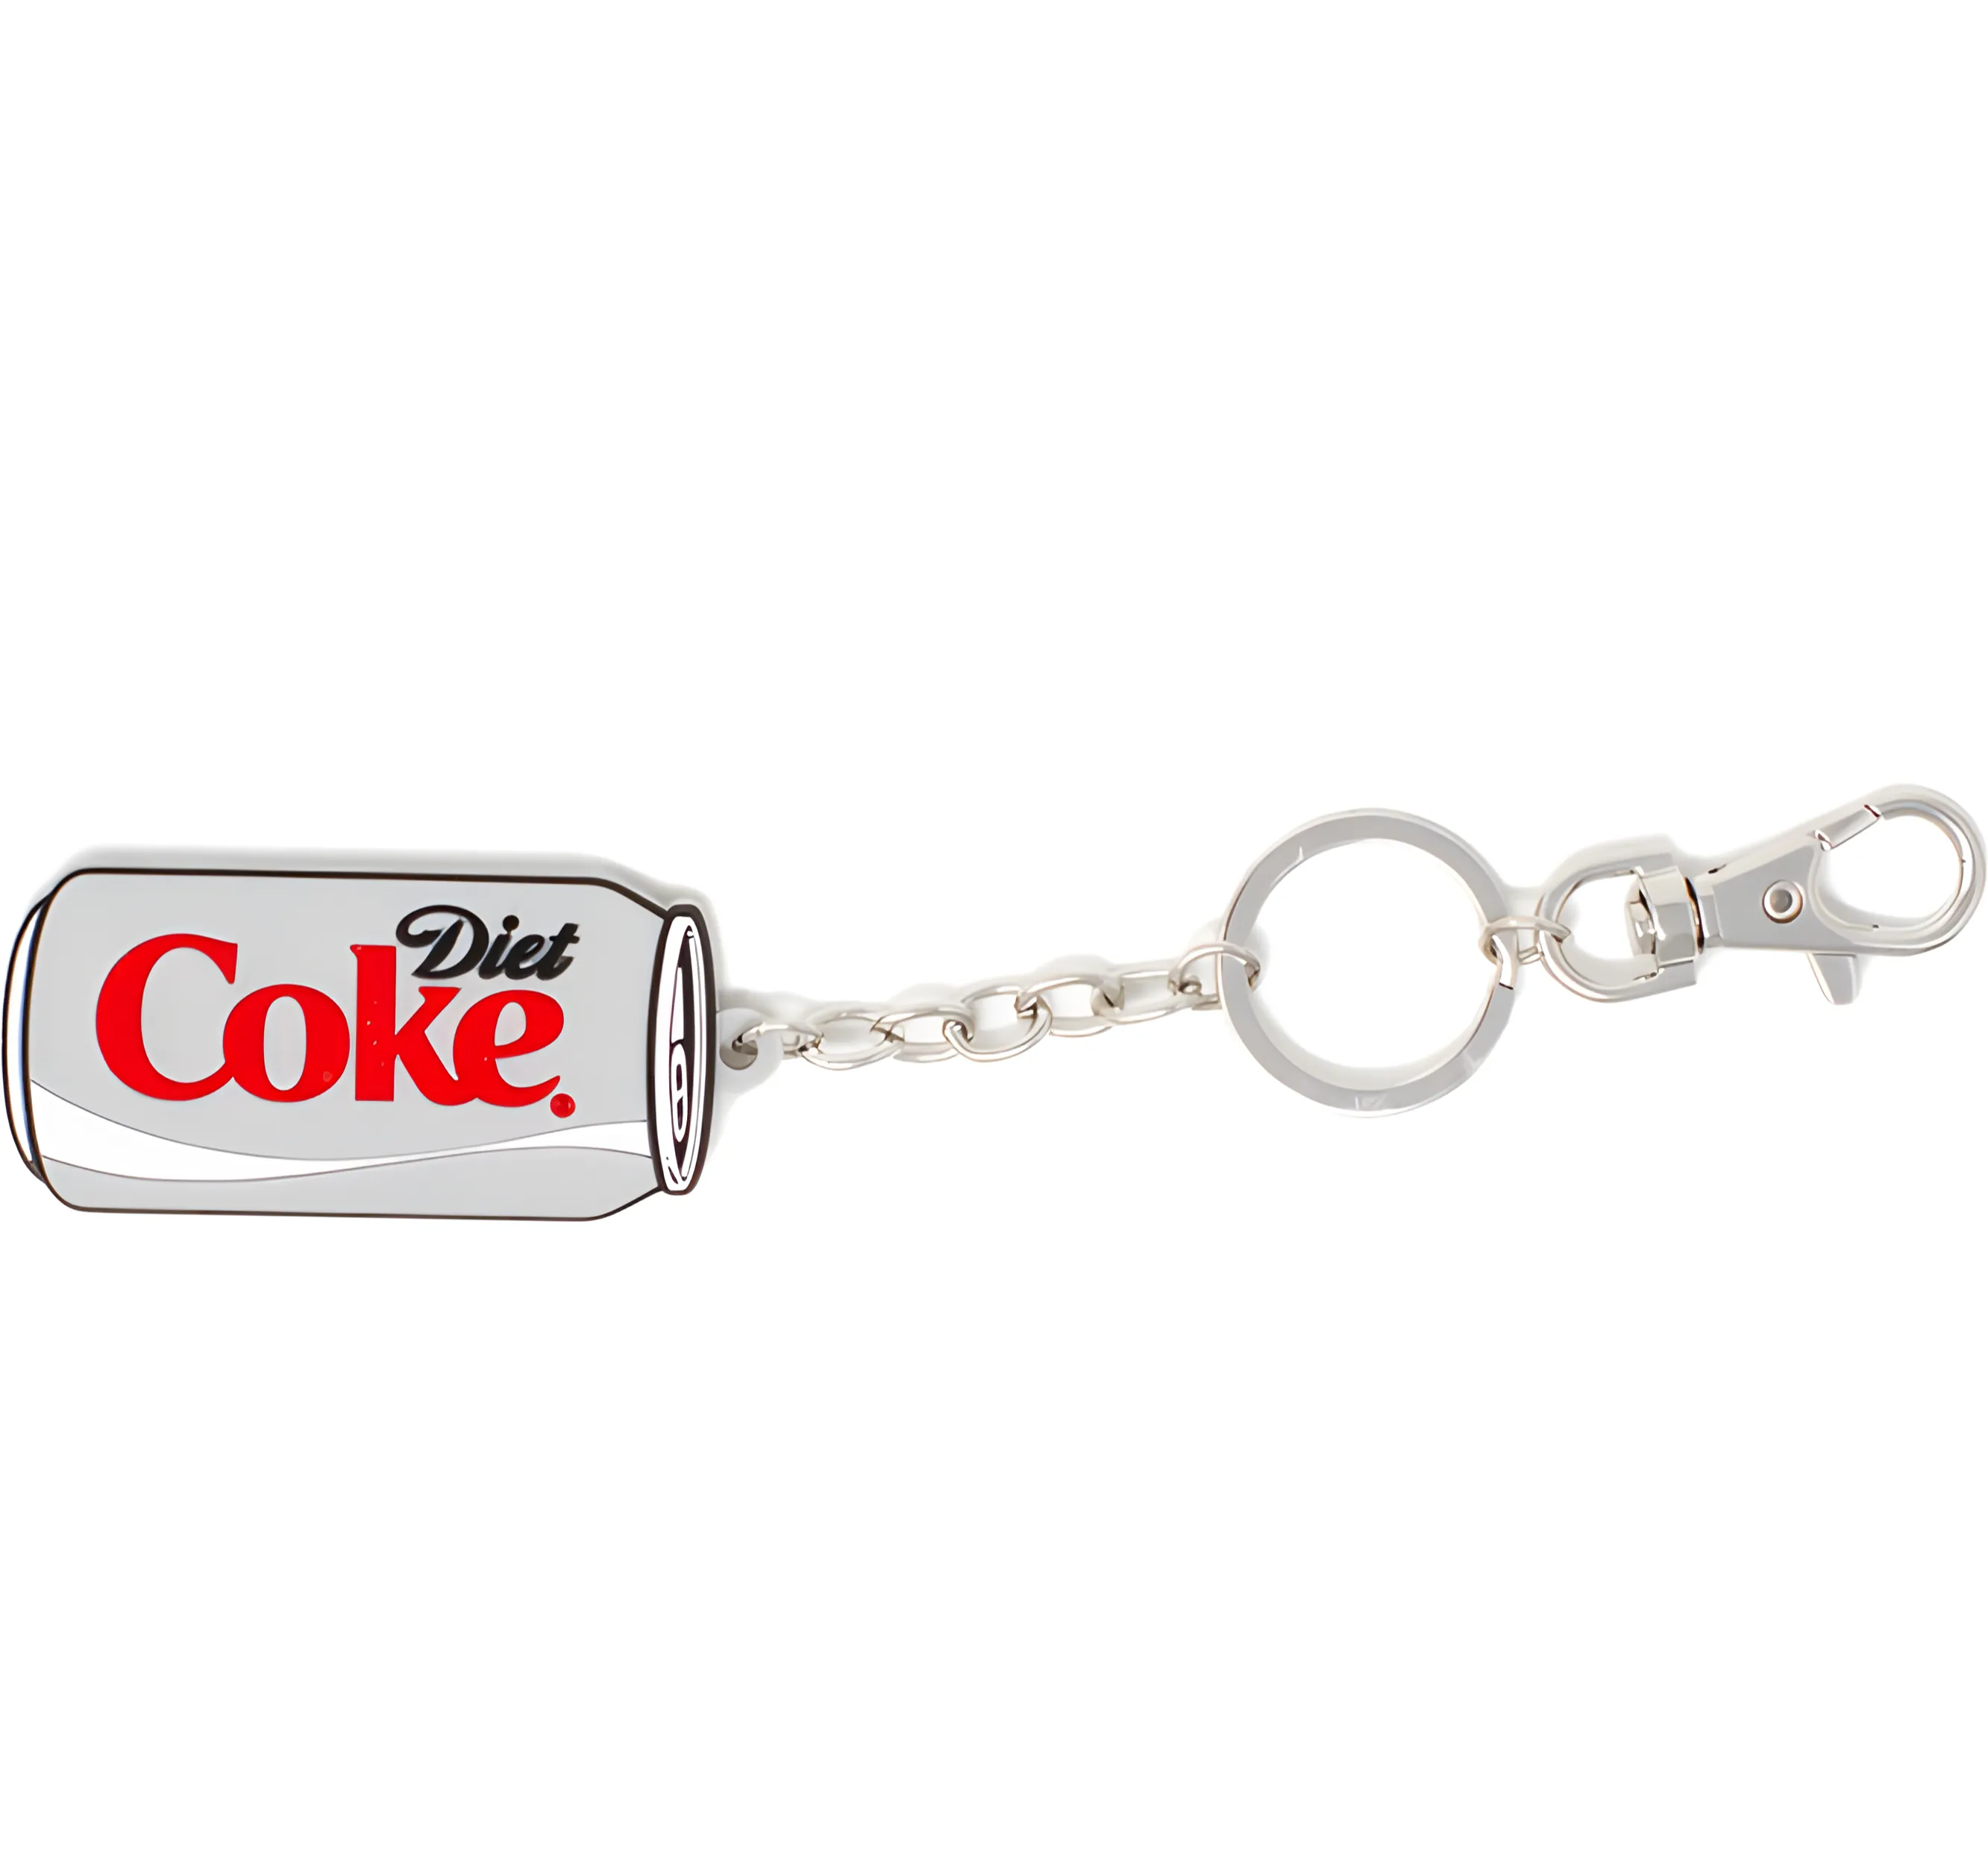 Free Coke Umbrella Or Keychain